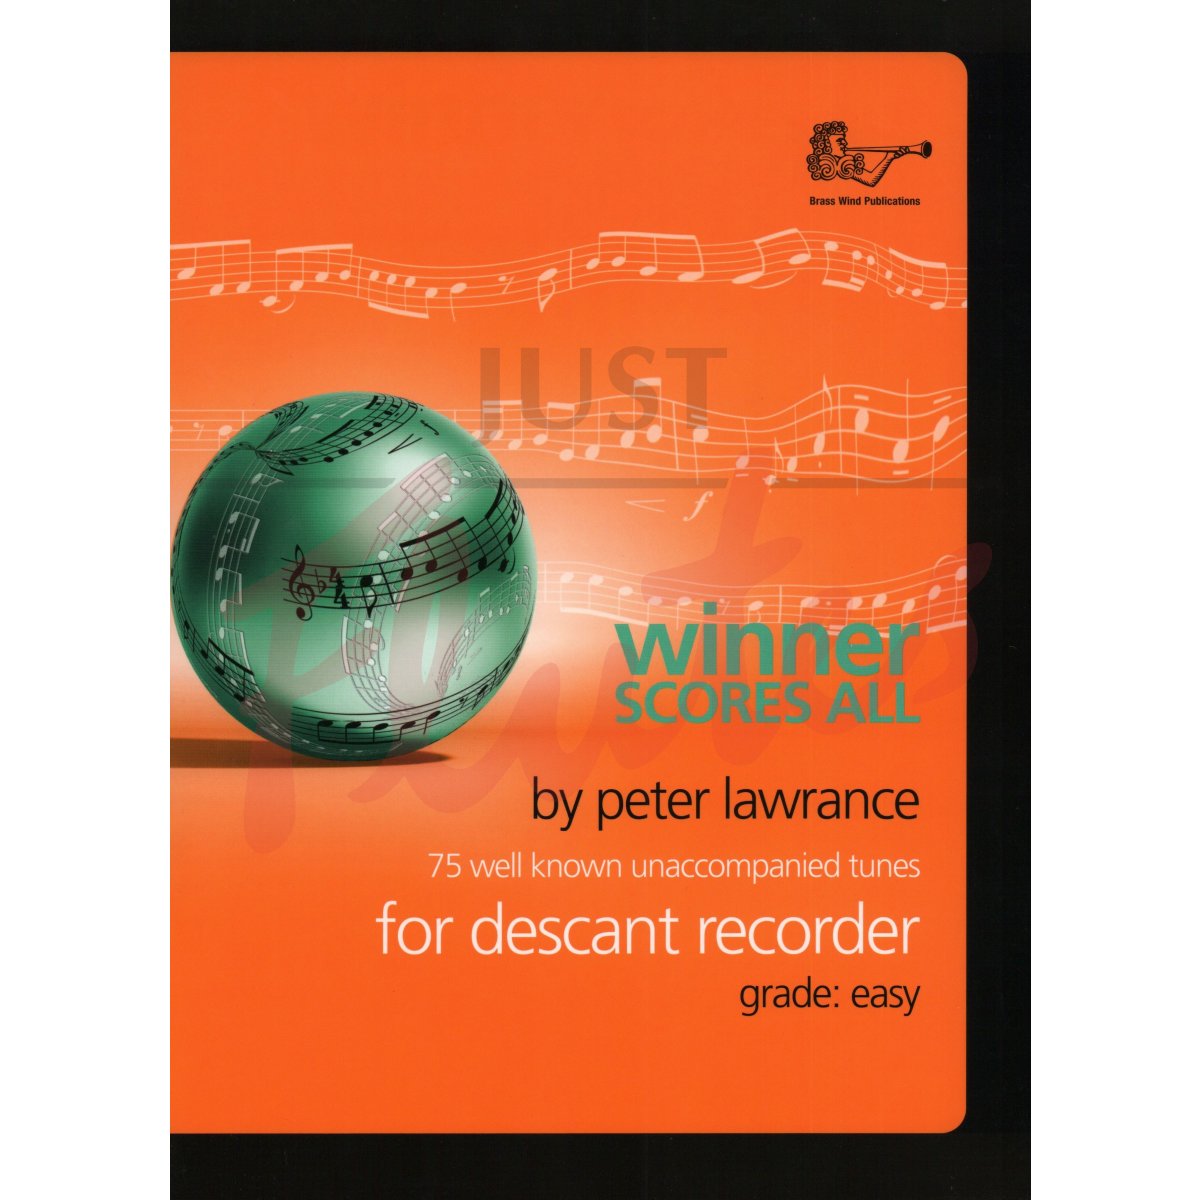 Winner Scores All for Descant Recorder